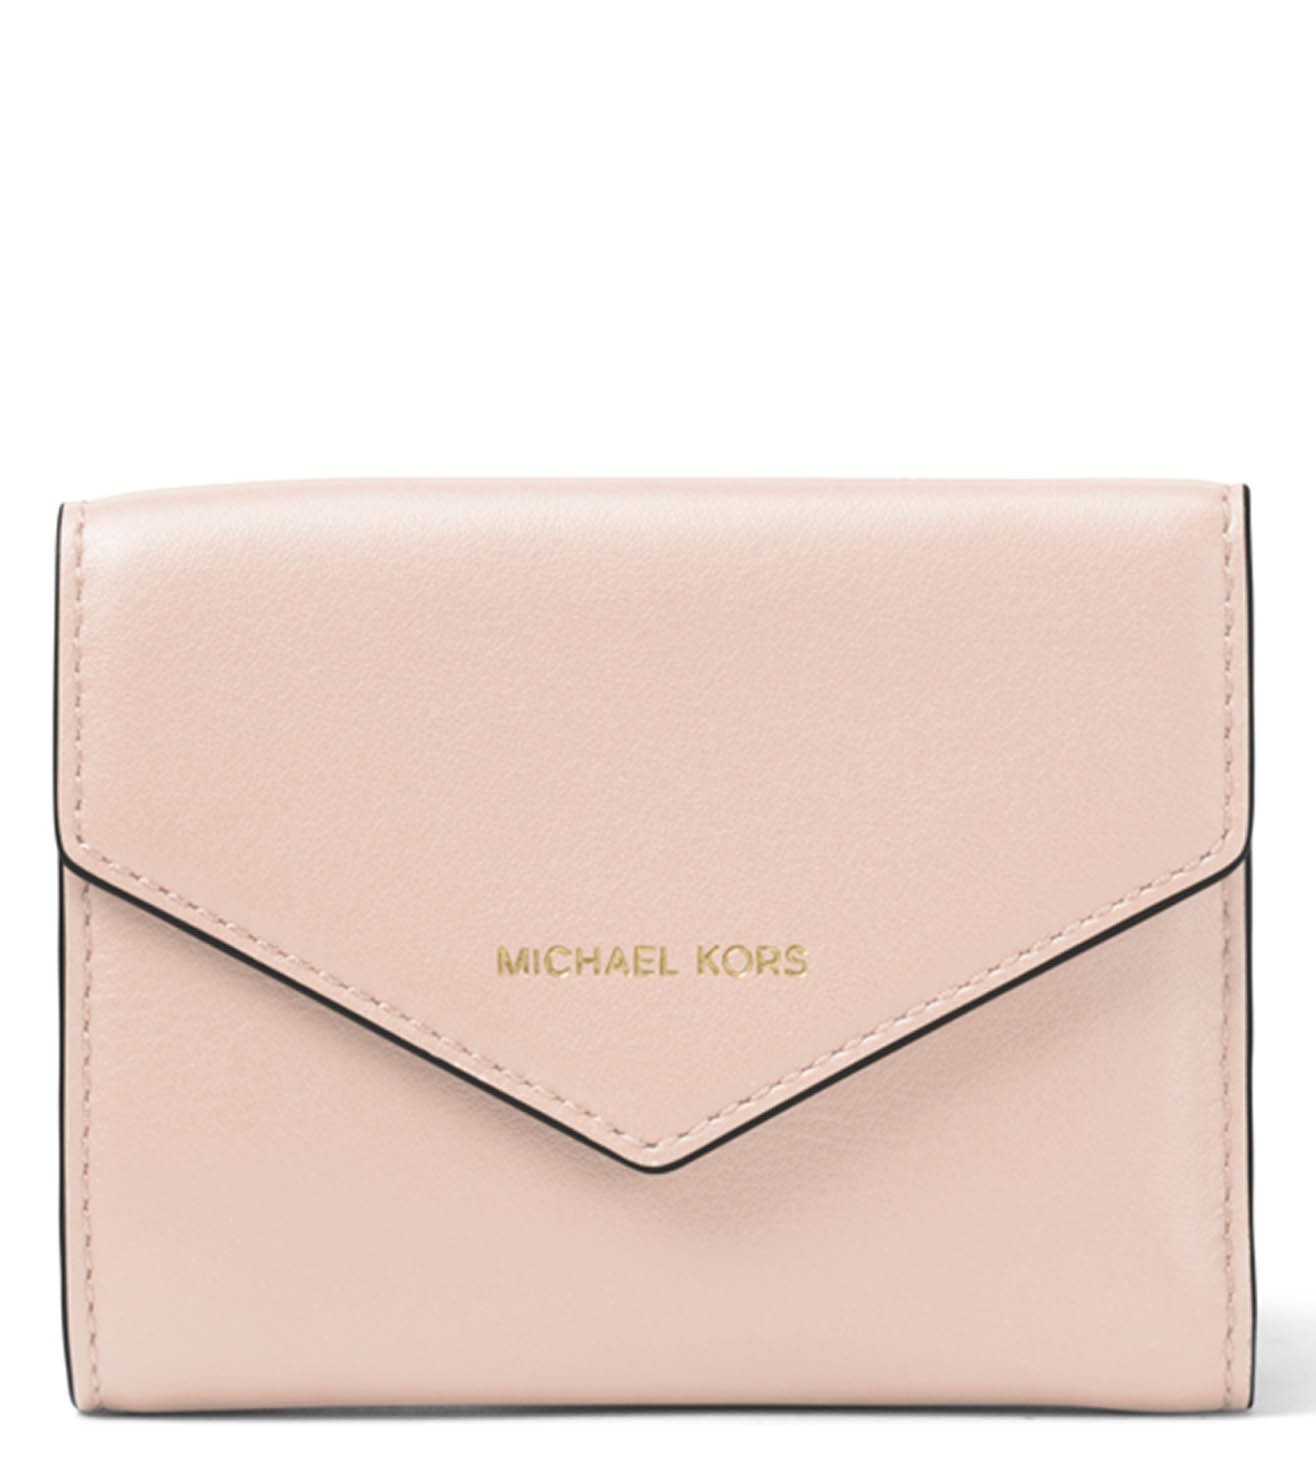 soft pink michael kors wallet